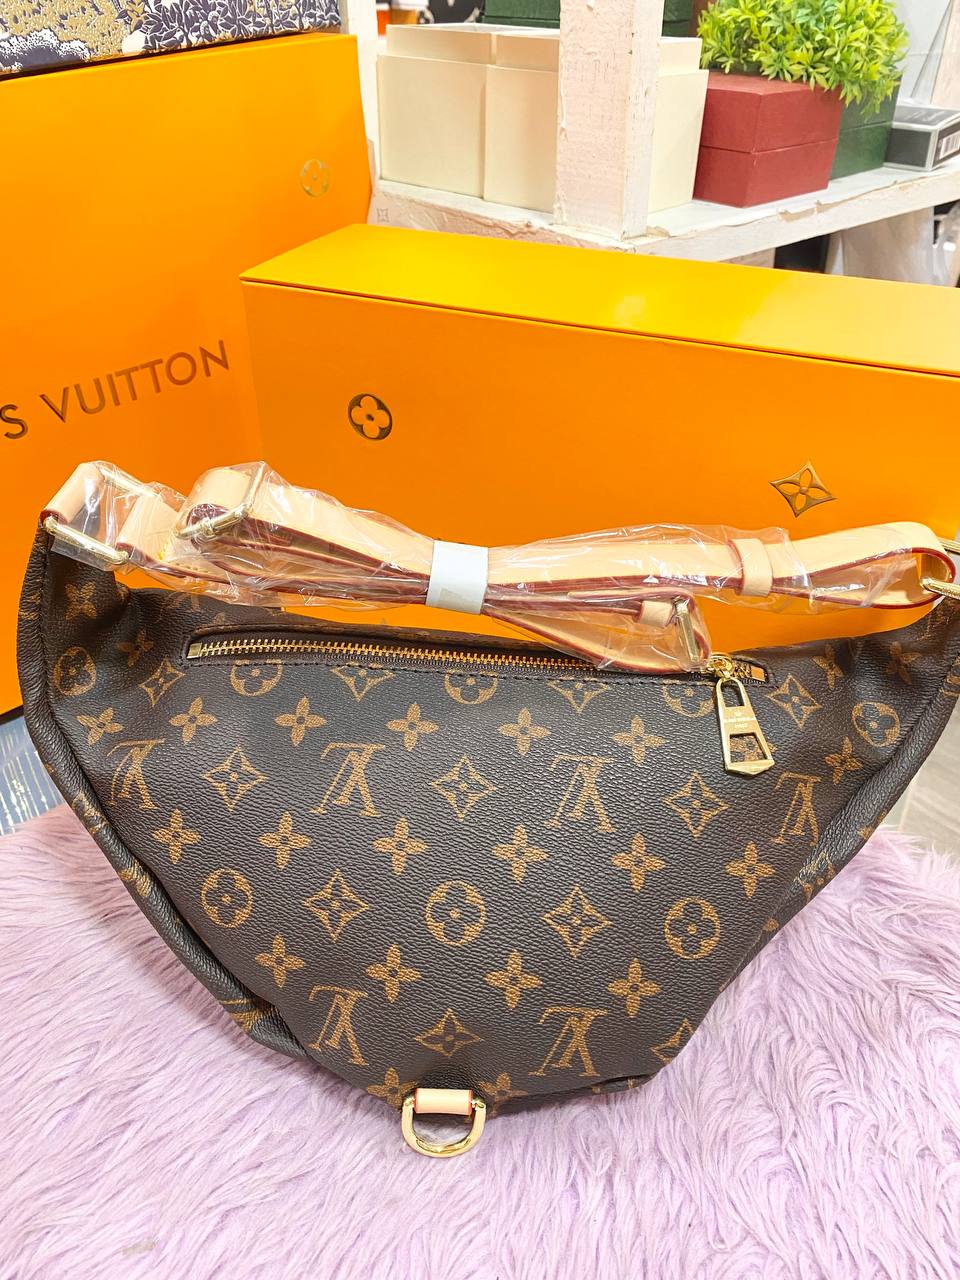 Louis Vuitton Womens Bum Bag Monogram